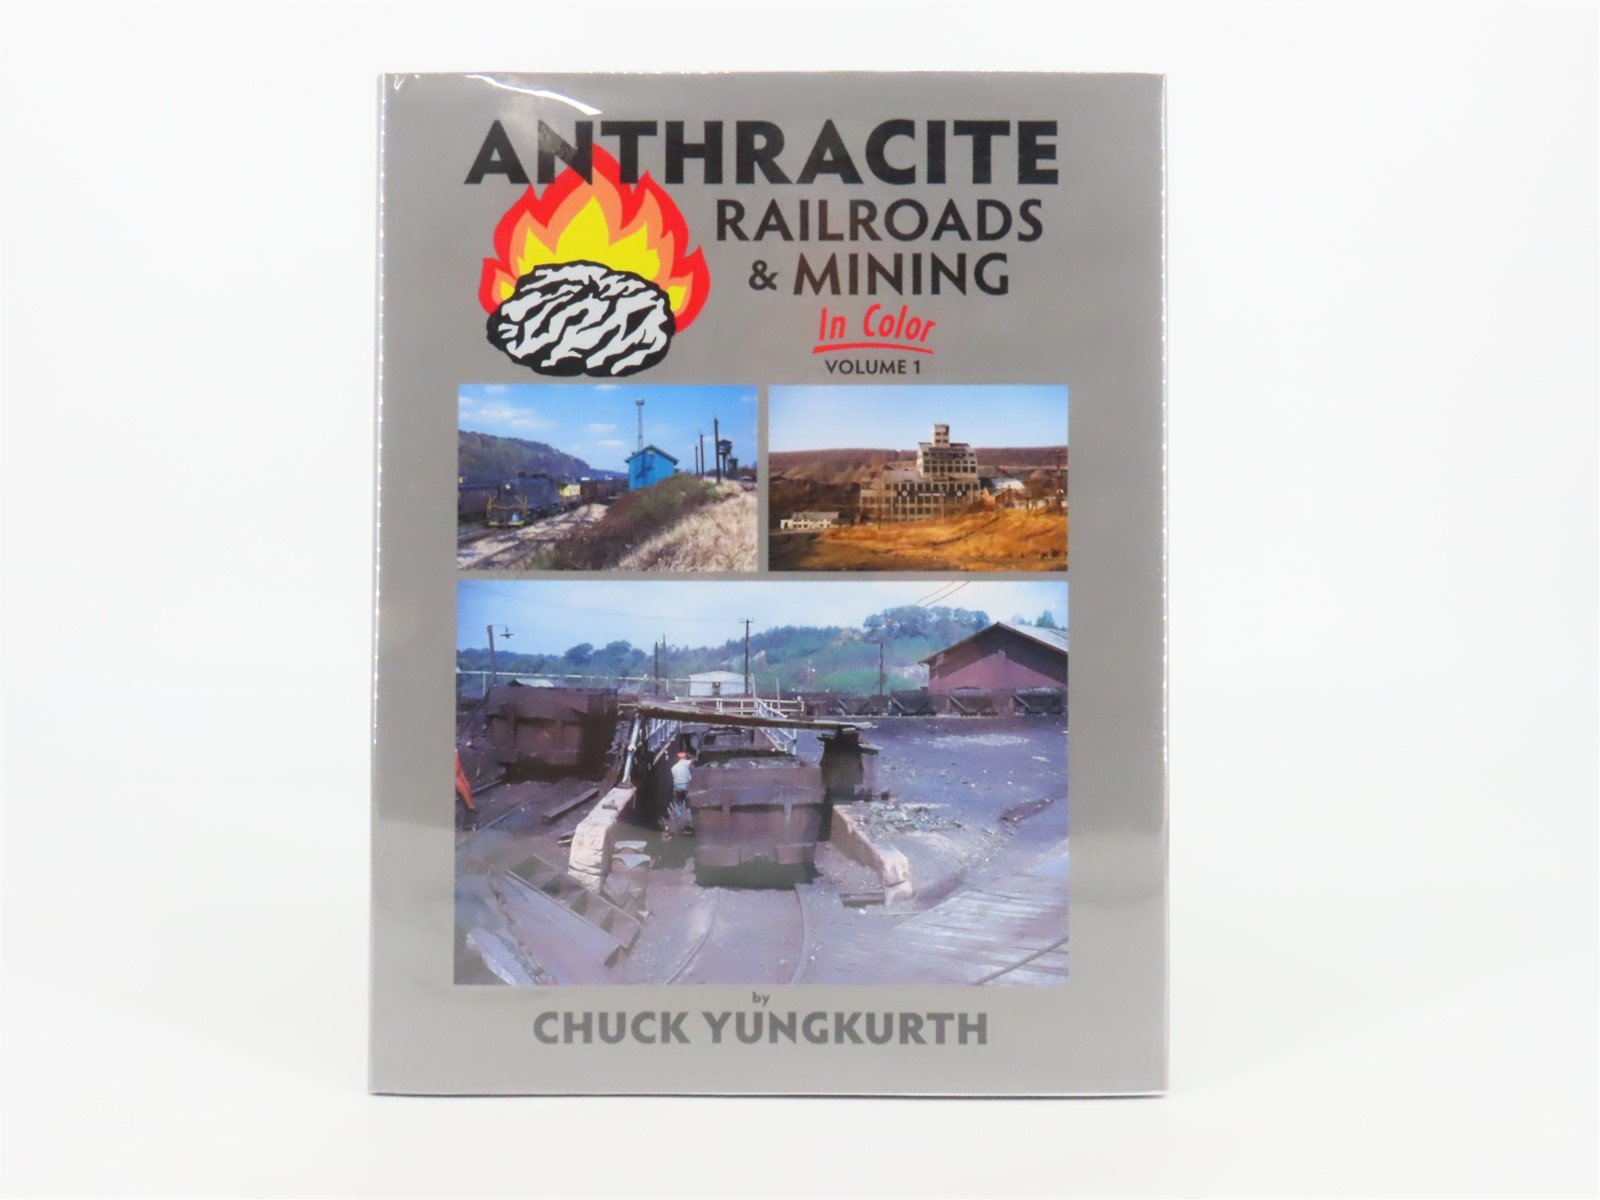 Morning Sun: Anthracite Railroads & Mining Volume 1 by Chuck Yungkurth ©2010 HC